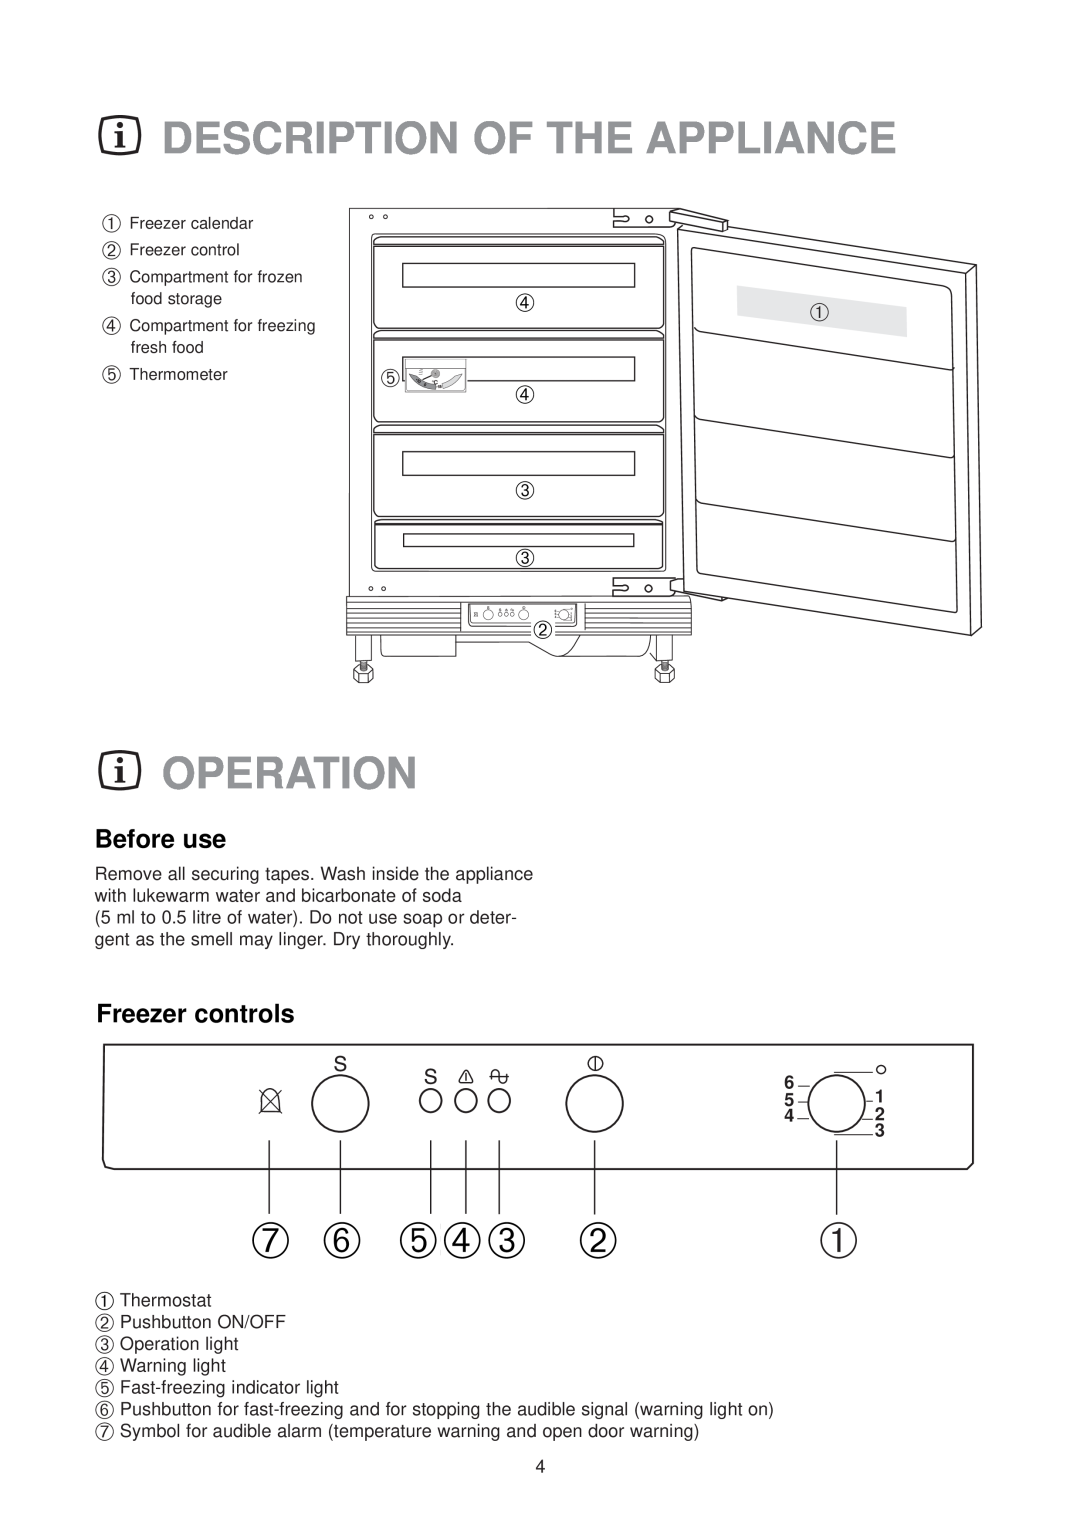 Zanussi ZU 9100 F manual Description Of The Appliance, Operation, Before use, Freezer controls, ➆ ➅ ➄➃➂ ➁, ➃➀ ➃ ➂ ➂ 